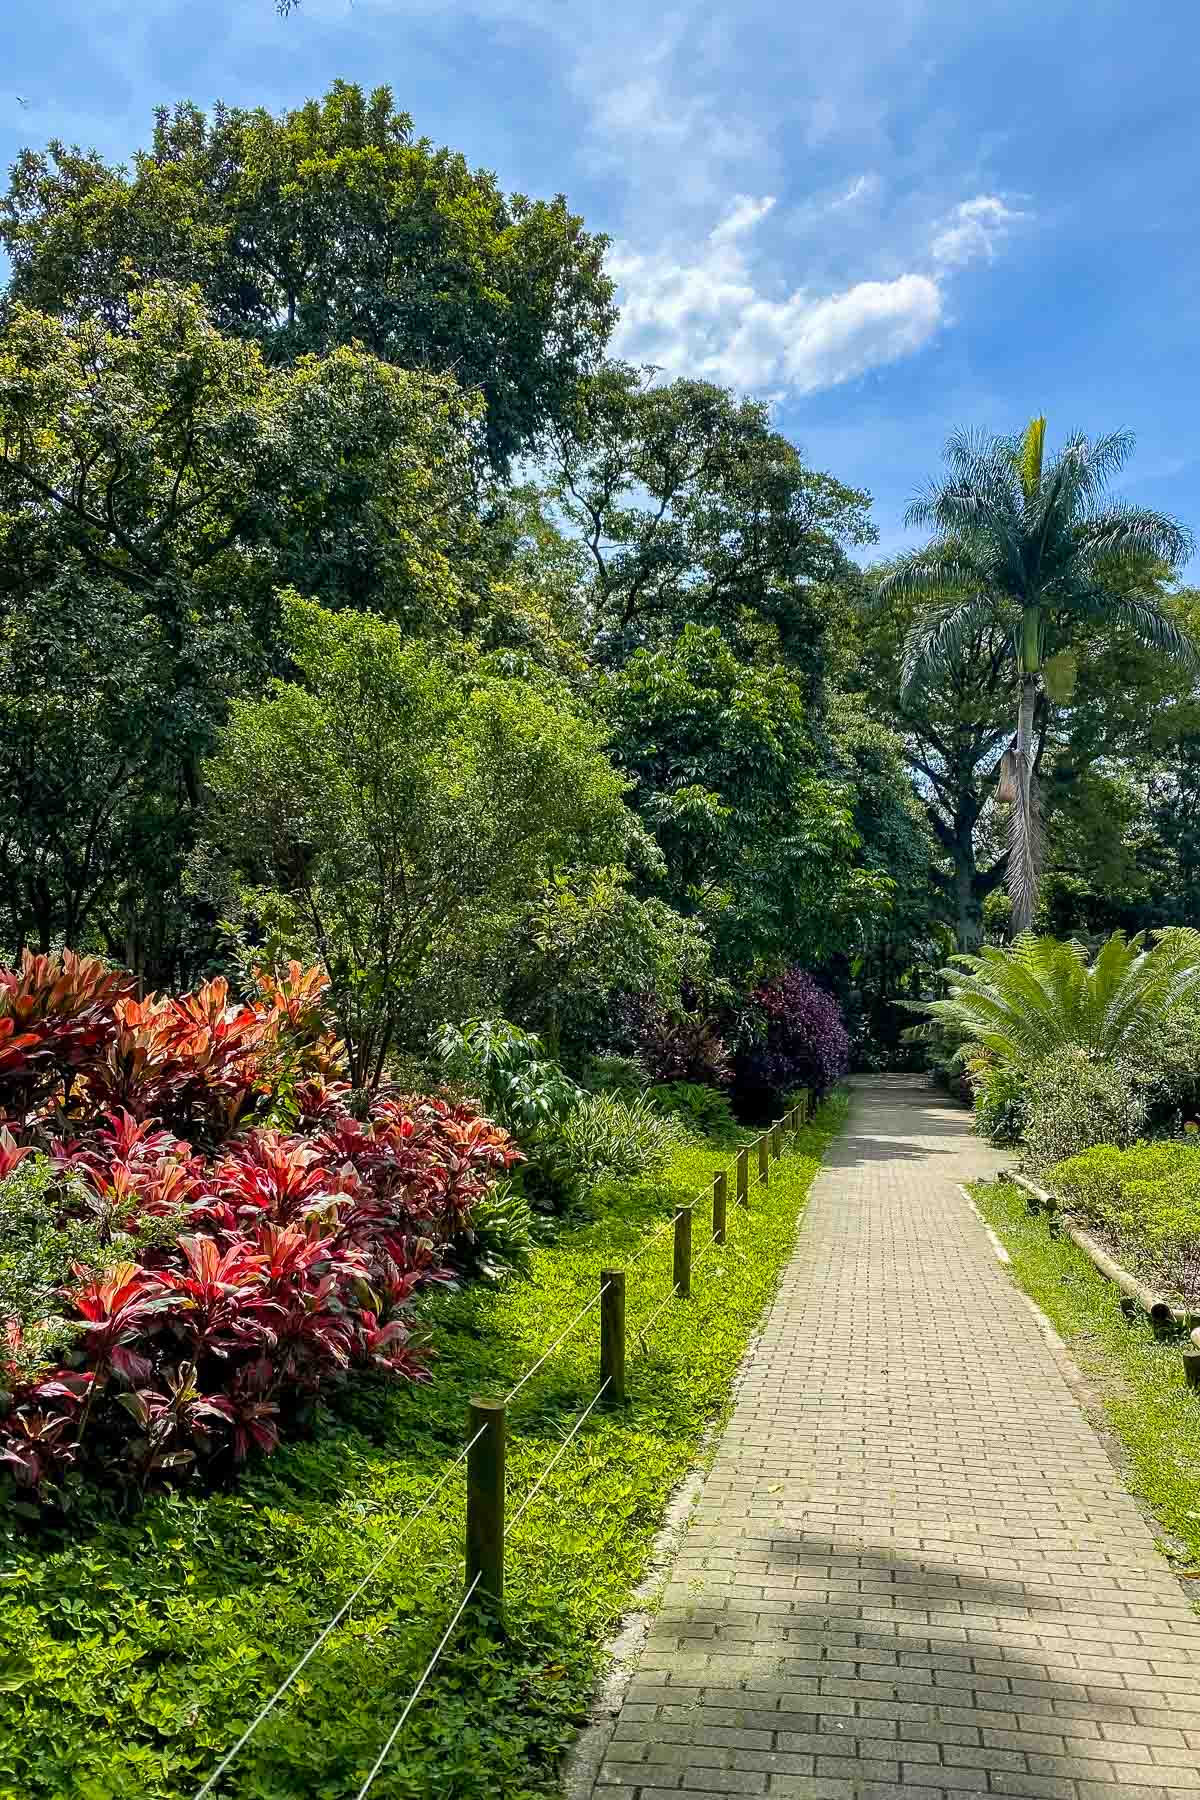 Walkway in Jardin Botanico de Medellin